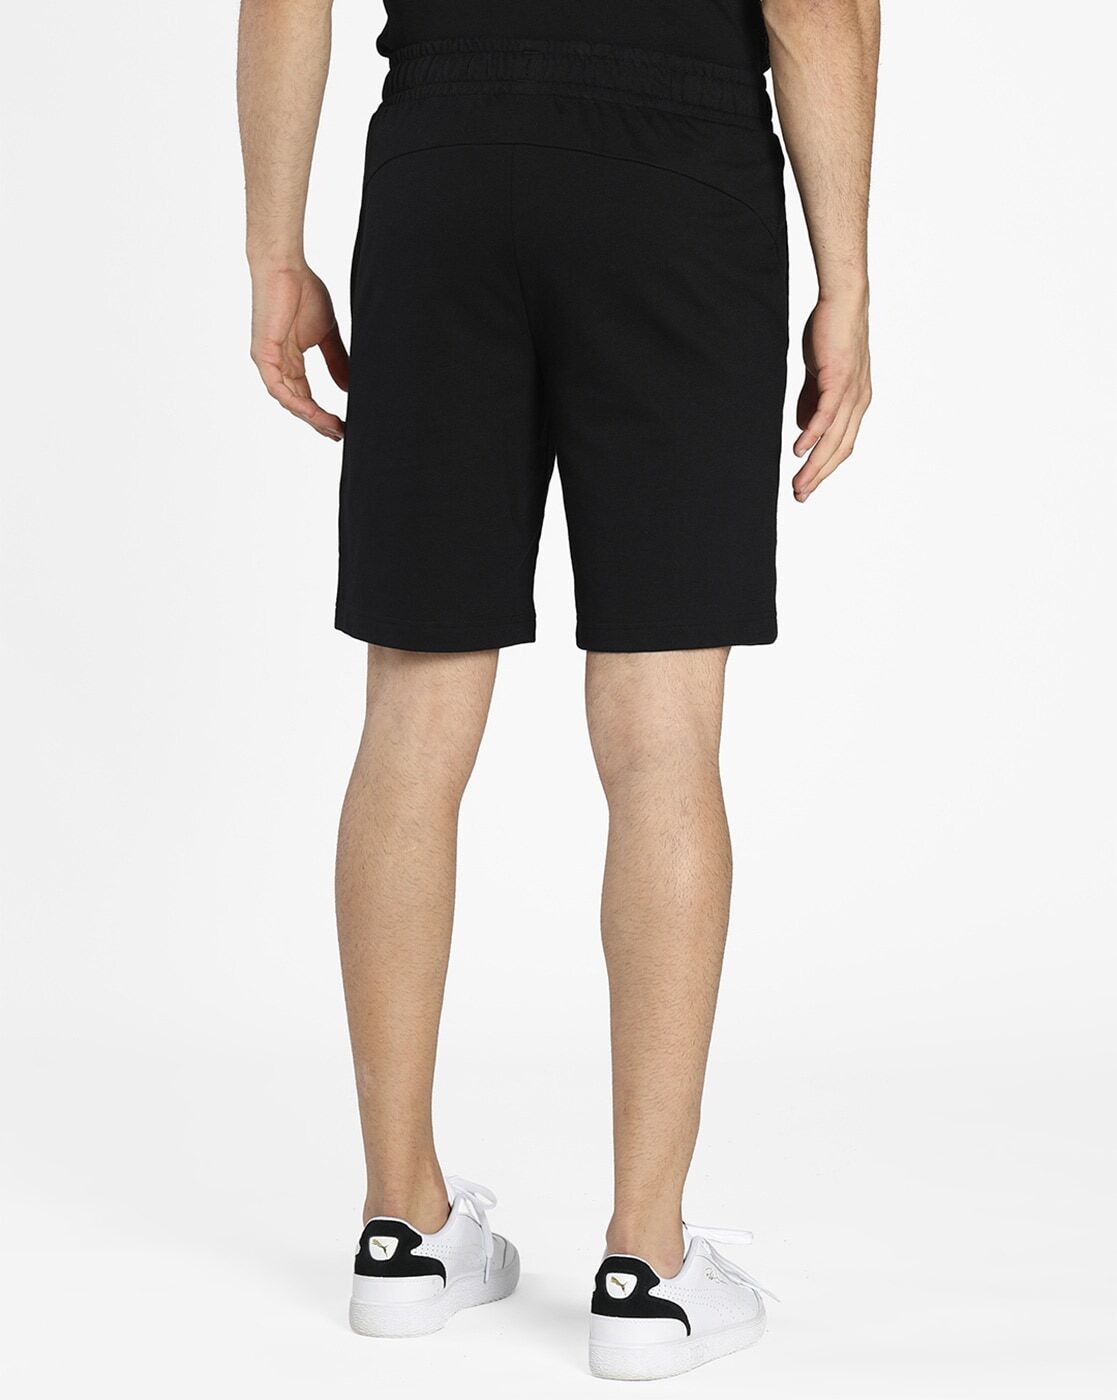 Brand Print Shorts with Slip Pockets-847910 01